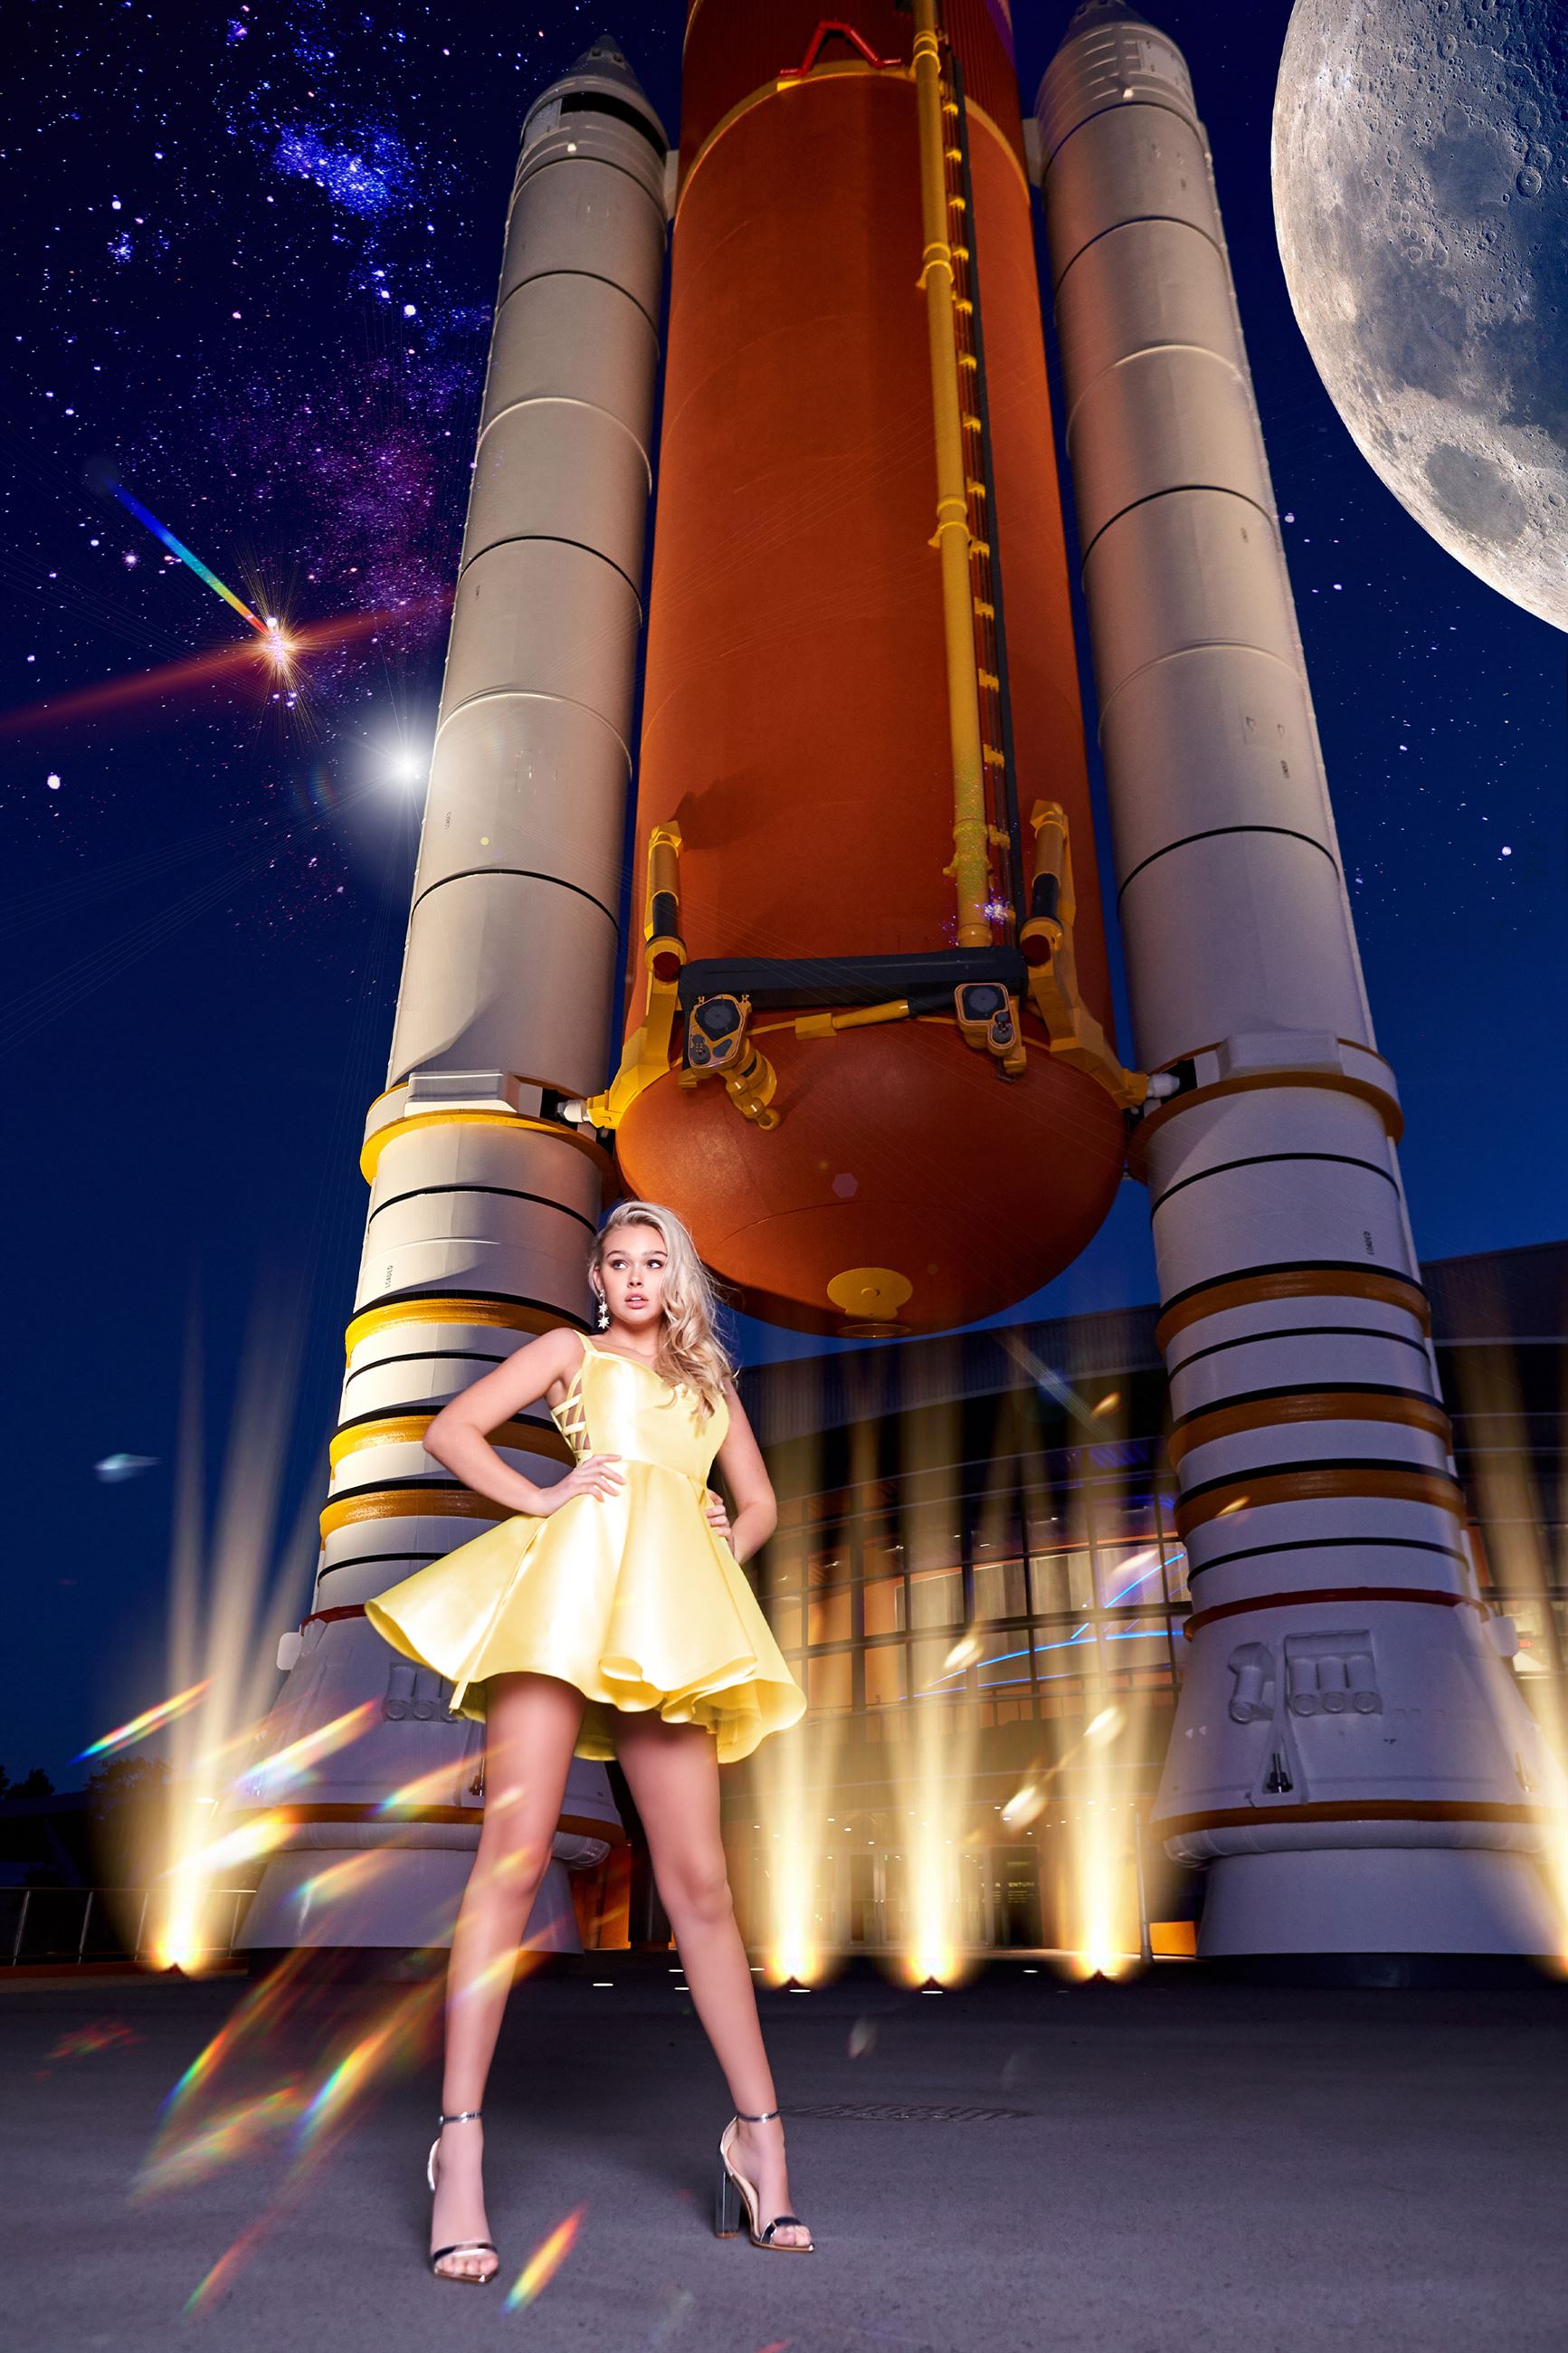 Blonde model in short yellow dress in front of rocket